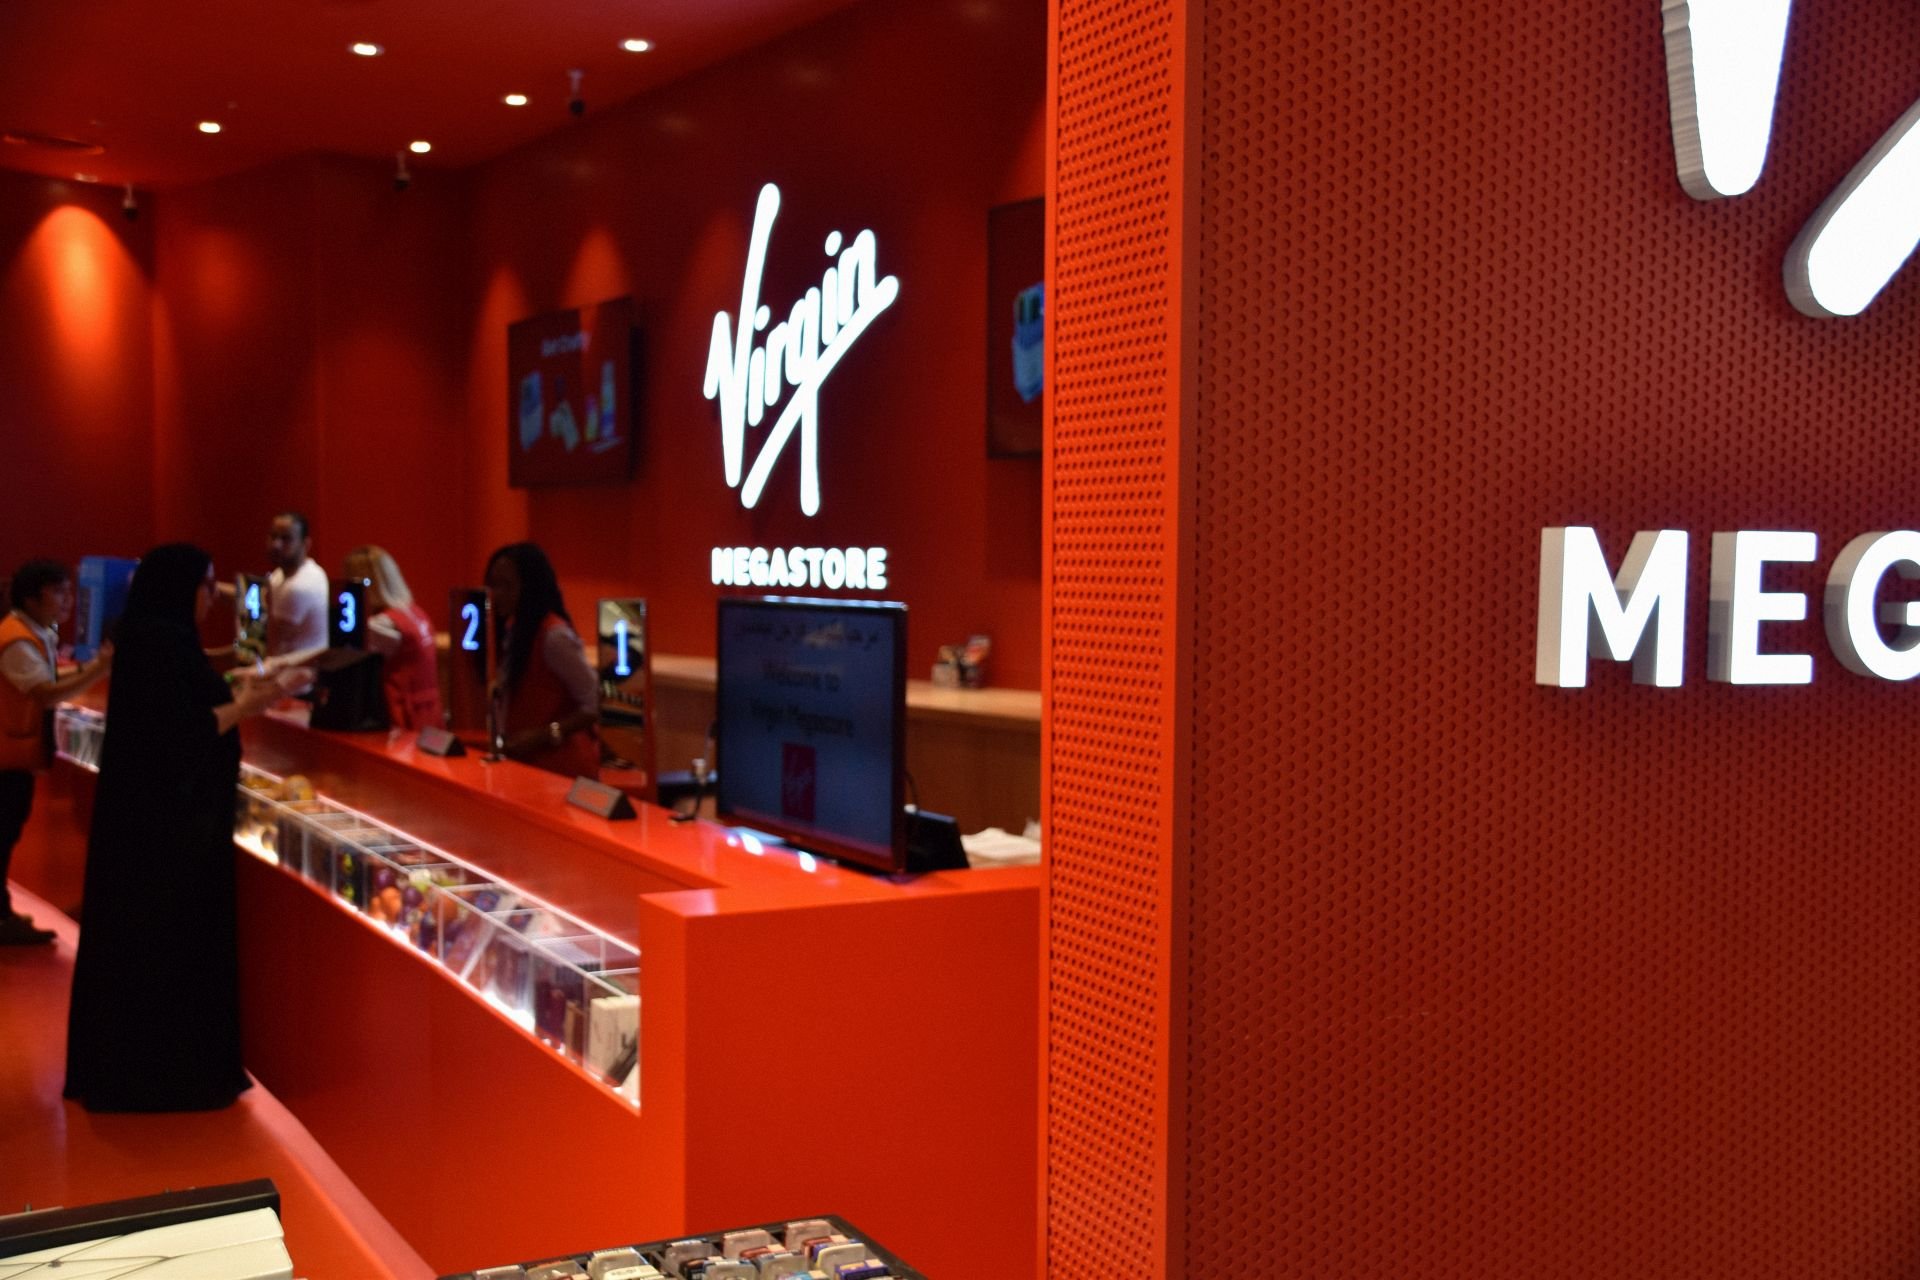 20180909 - Virgin MegaStore Dubai Mall - 13